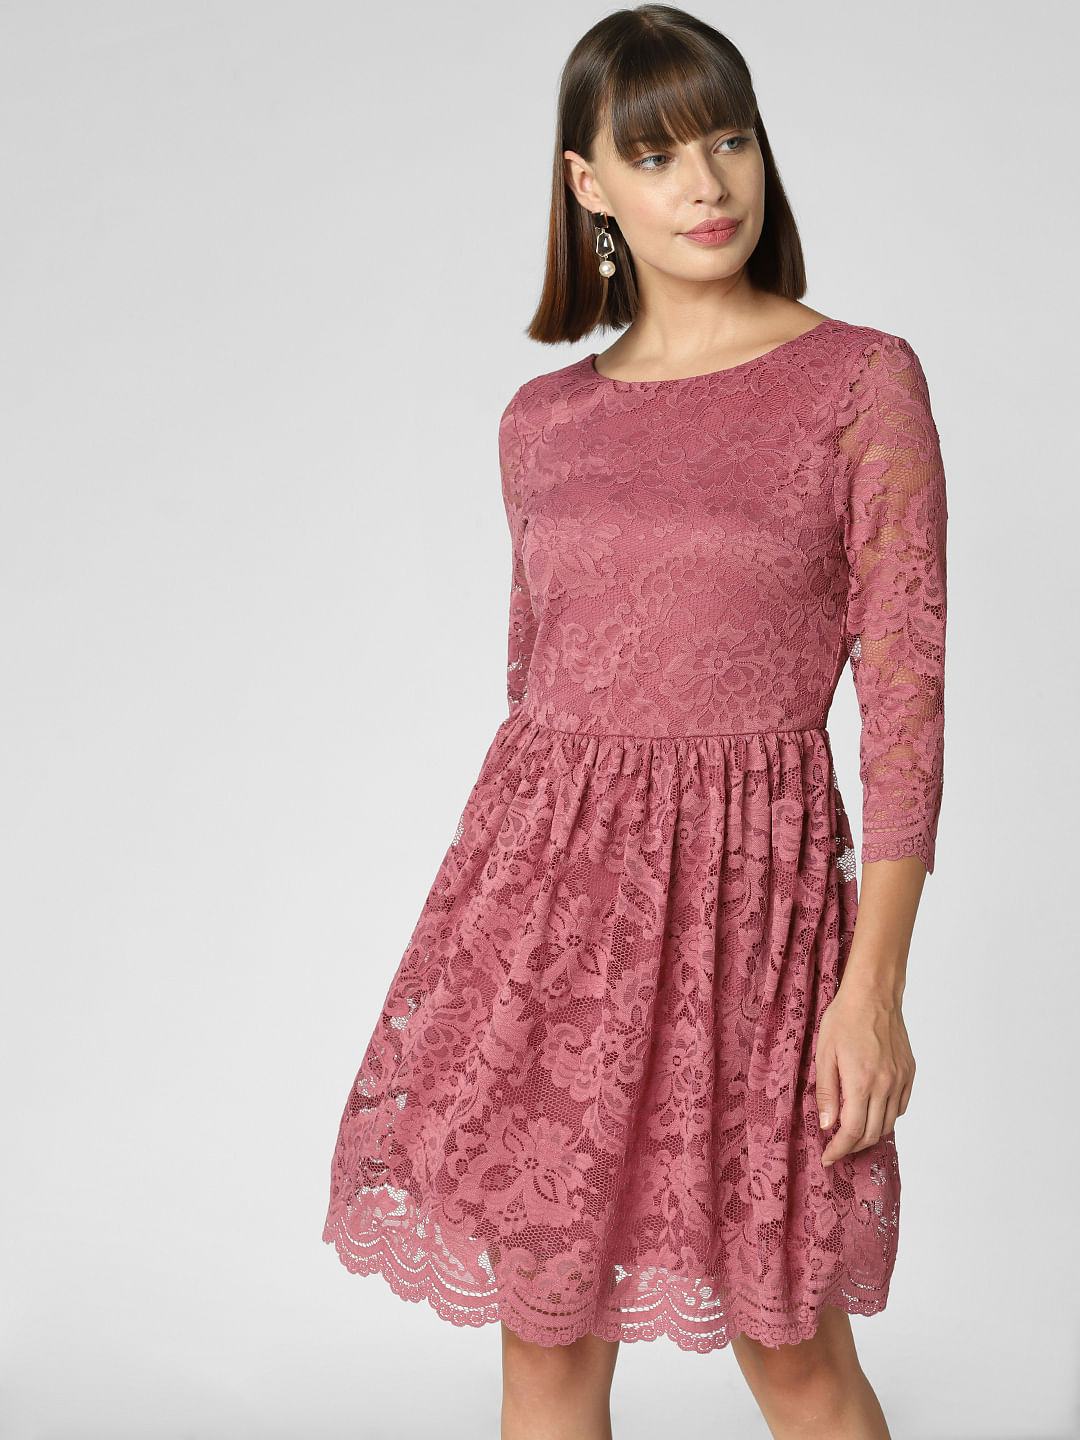 dark pink lace dress